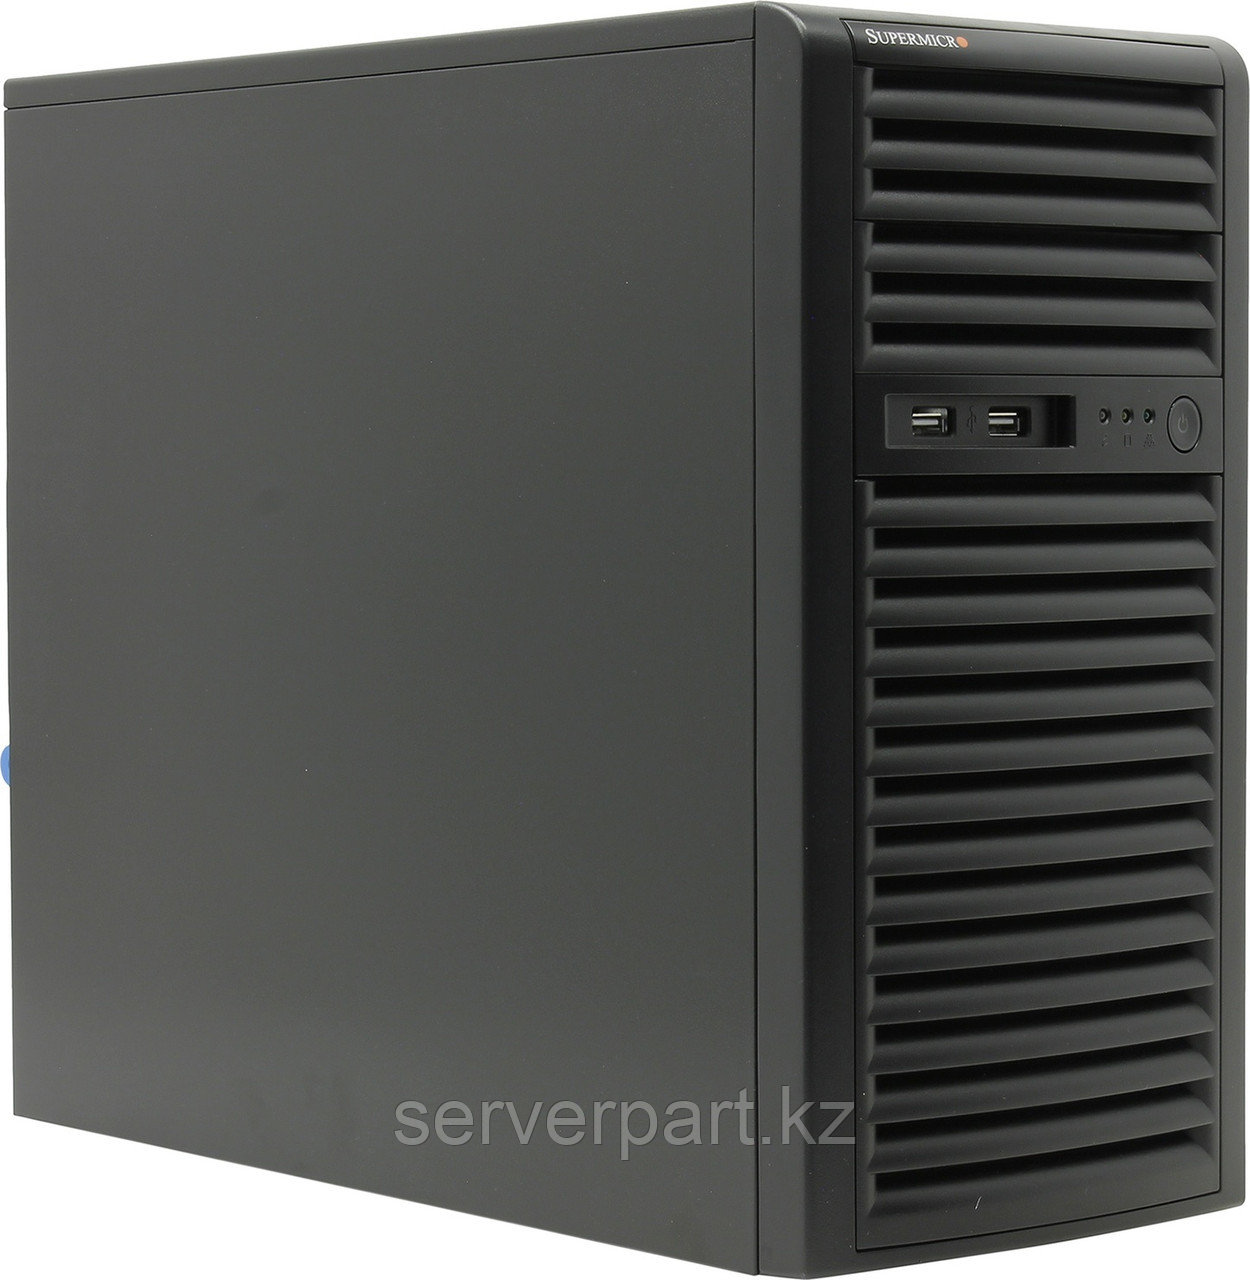 Сервер Supermicro 5039D Tower/4-core intel xeon E3-1220v6 3GHz/64GB UDIMM nECC1x480GB SSD DT Hyb, фото 1